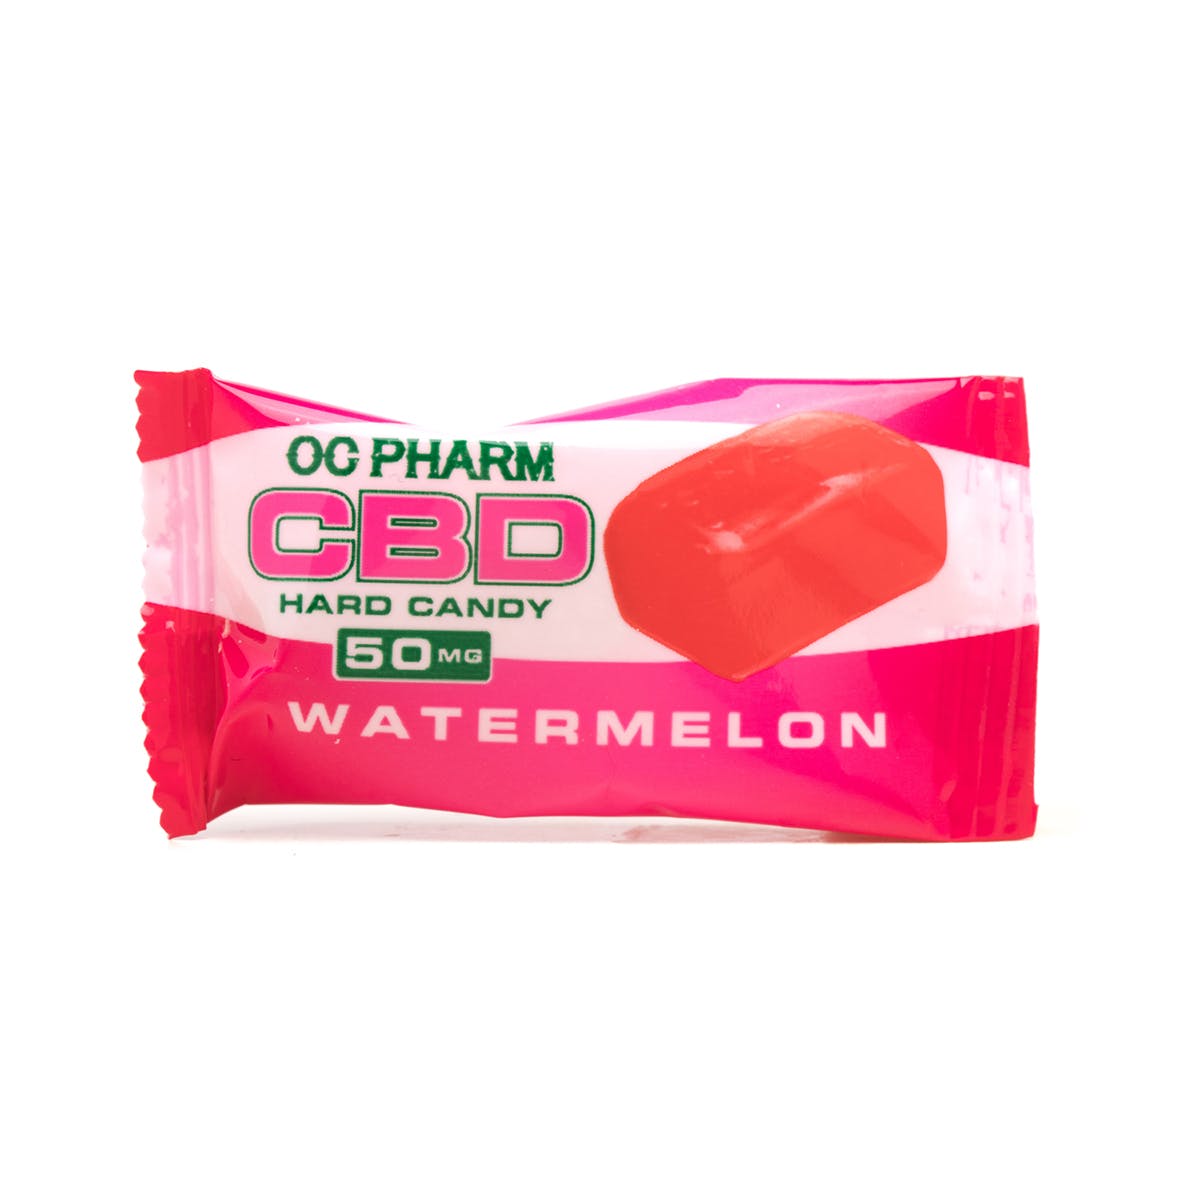 edible-oc-pharm-watermelon-cbd-hard-candy-50mg